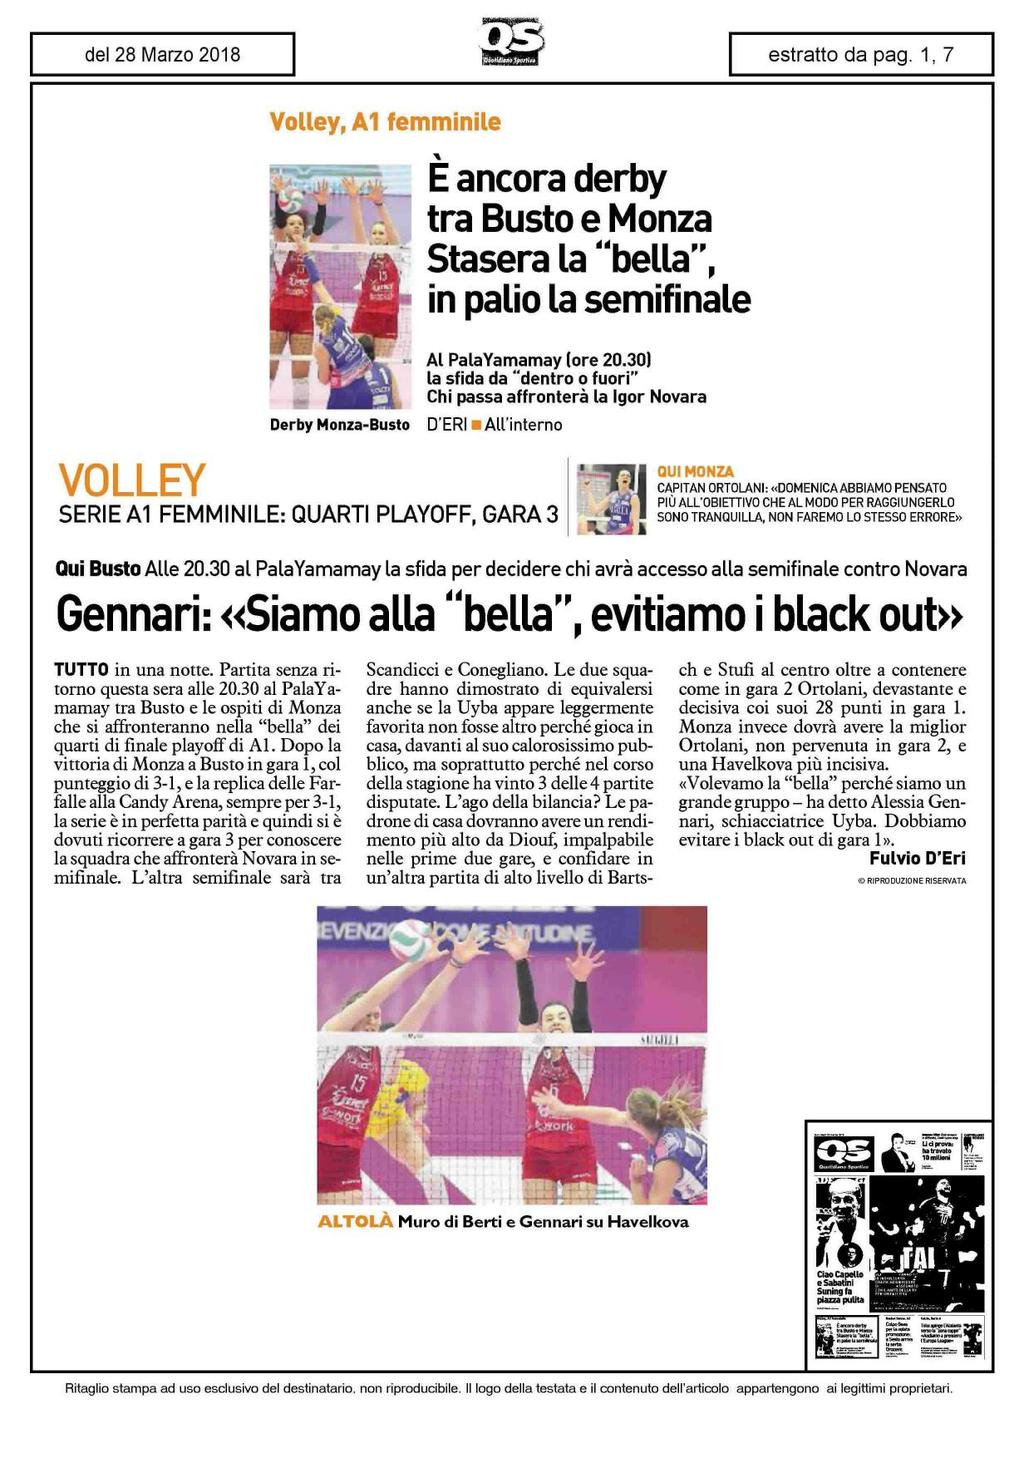 Volley, A1 femminile E ancora derby tra Busto e Monza Stasera la "bella", in palio la semifinale Derby Monza-Busto Al PalaYamamay (ore 20.